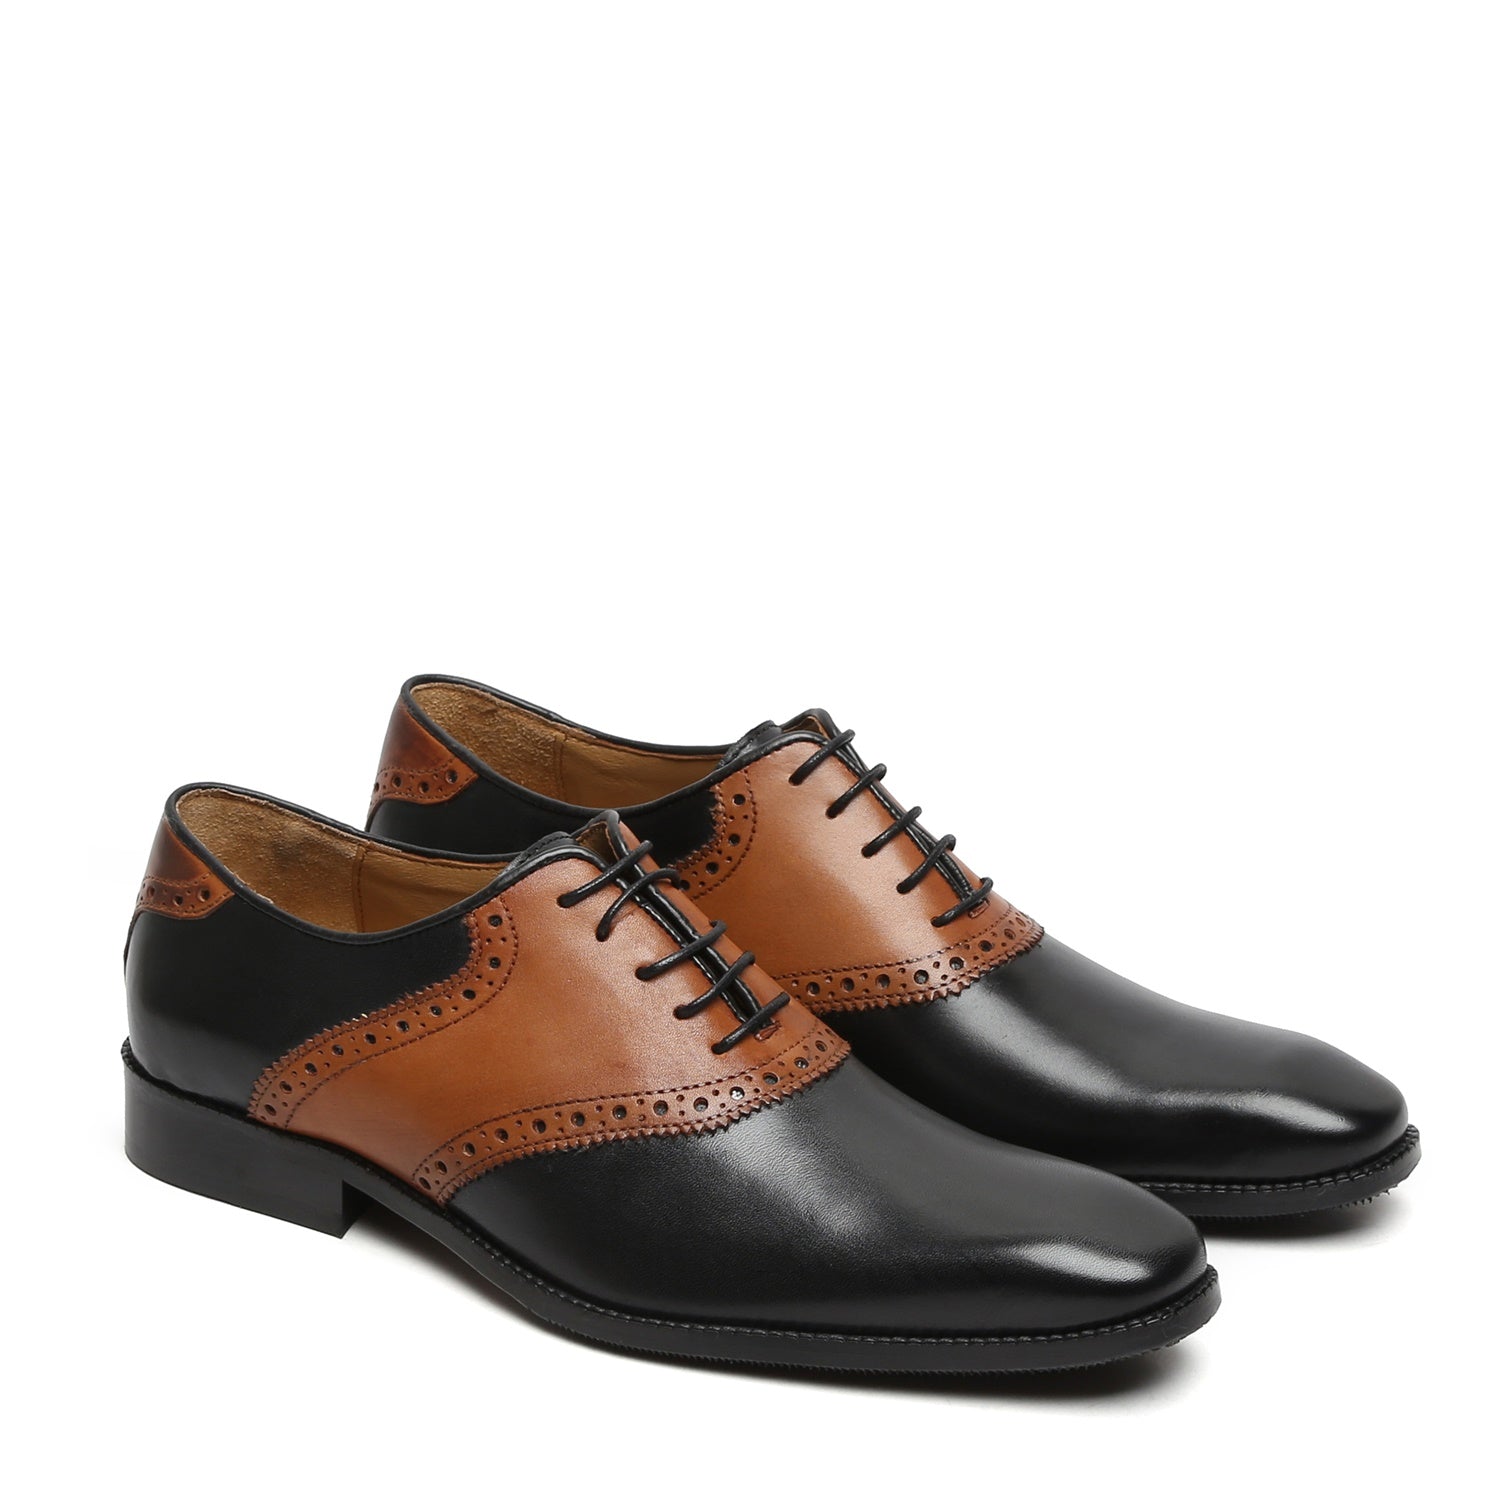 Black And Tan Leather Plain Toe Quarter Brogue Formal Shoes By Brune & Bareskin